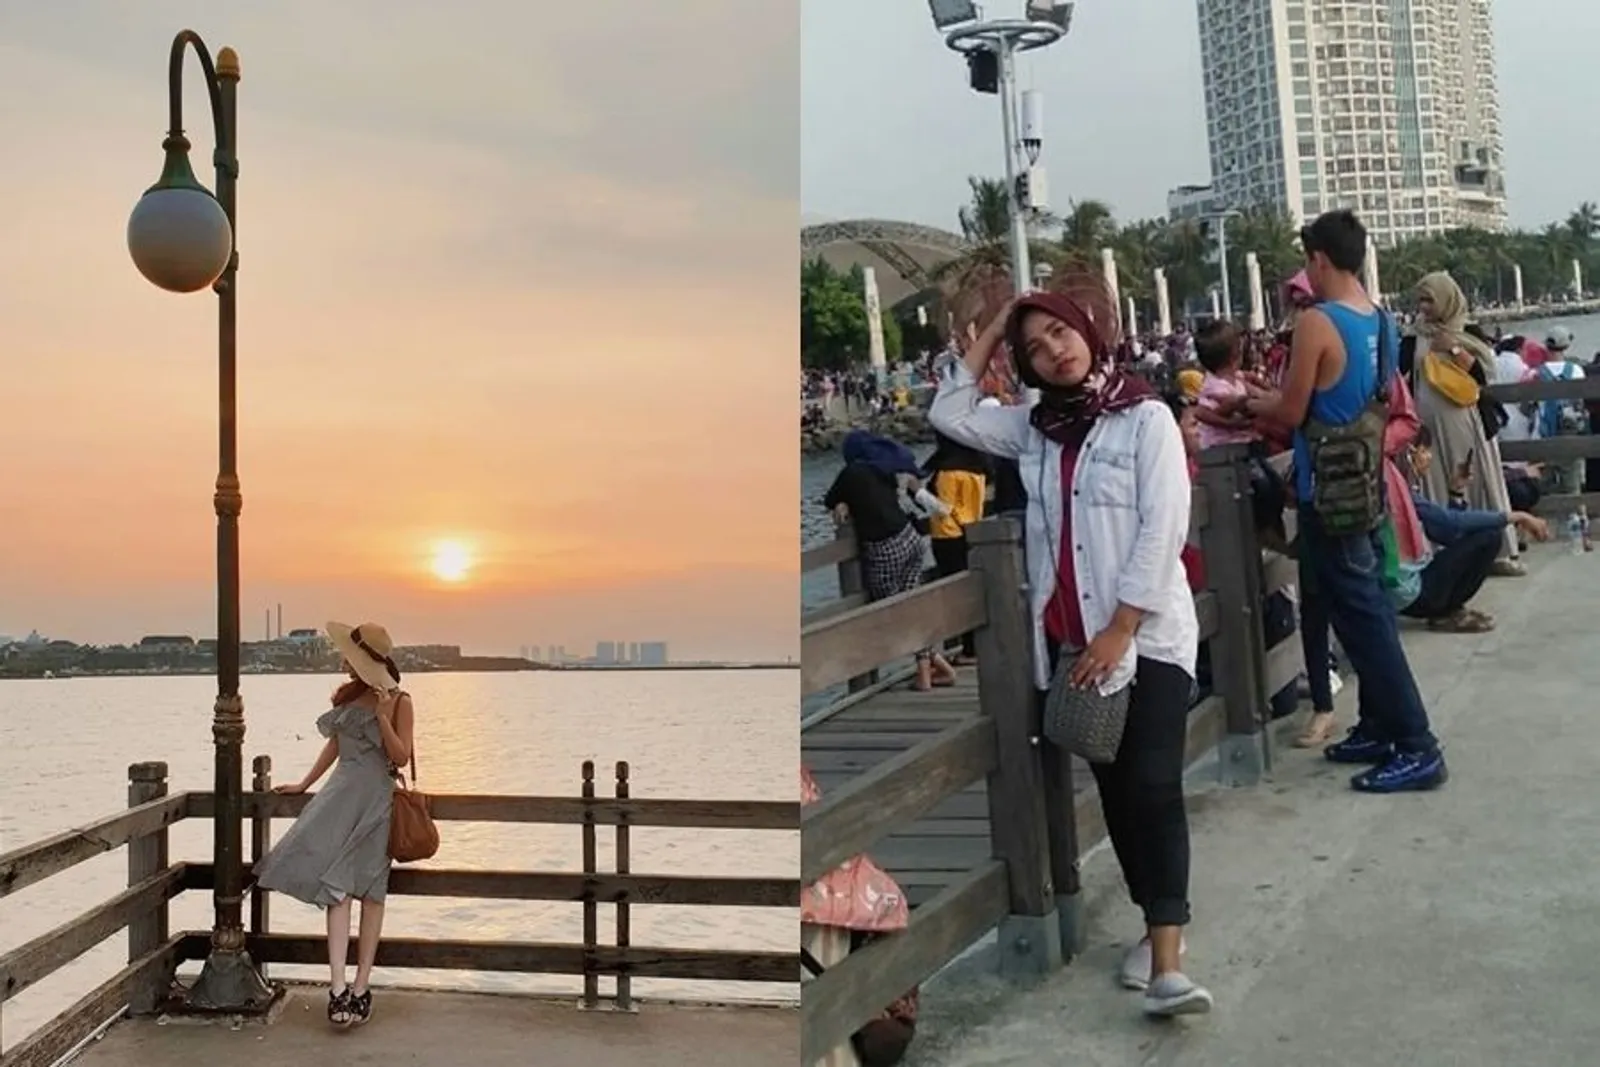 10 Potret Ekspektasi VS Realita Liburan di Jakarta, Beda Banget!